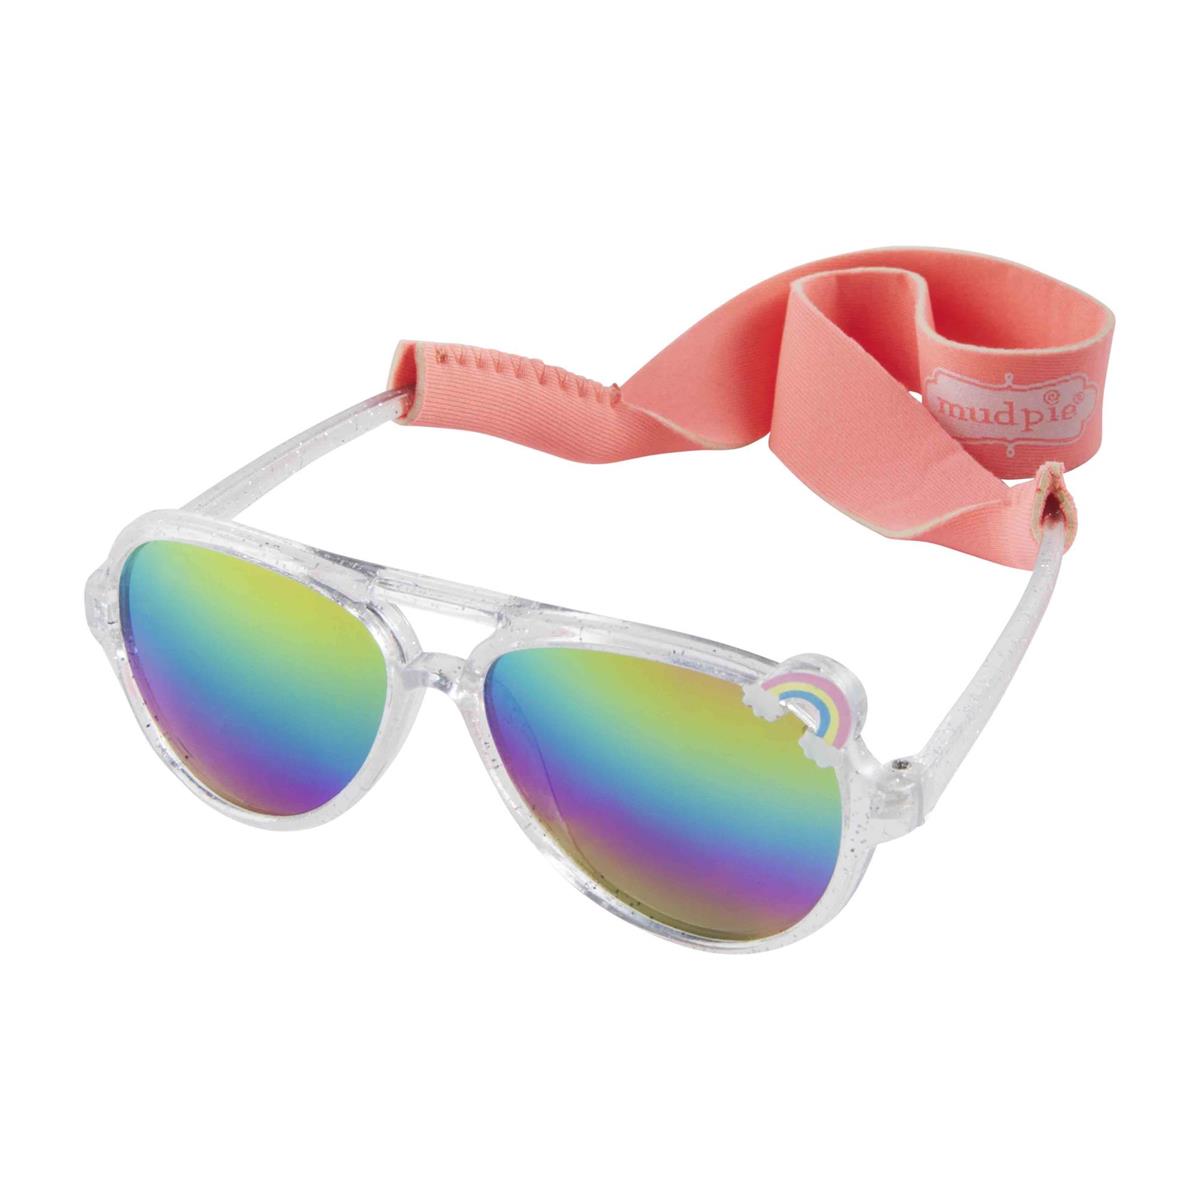 Kids Sunglasses & Strap Set - Rainbow